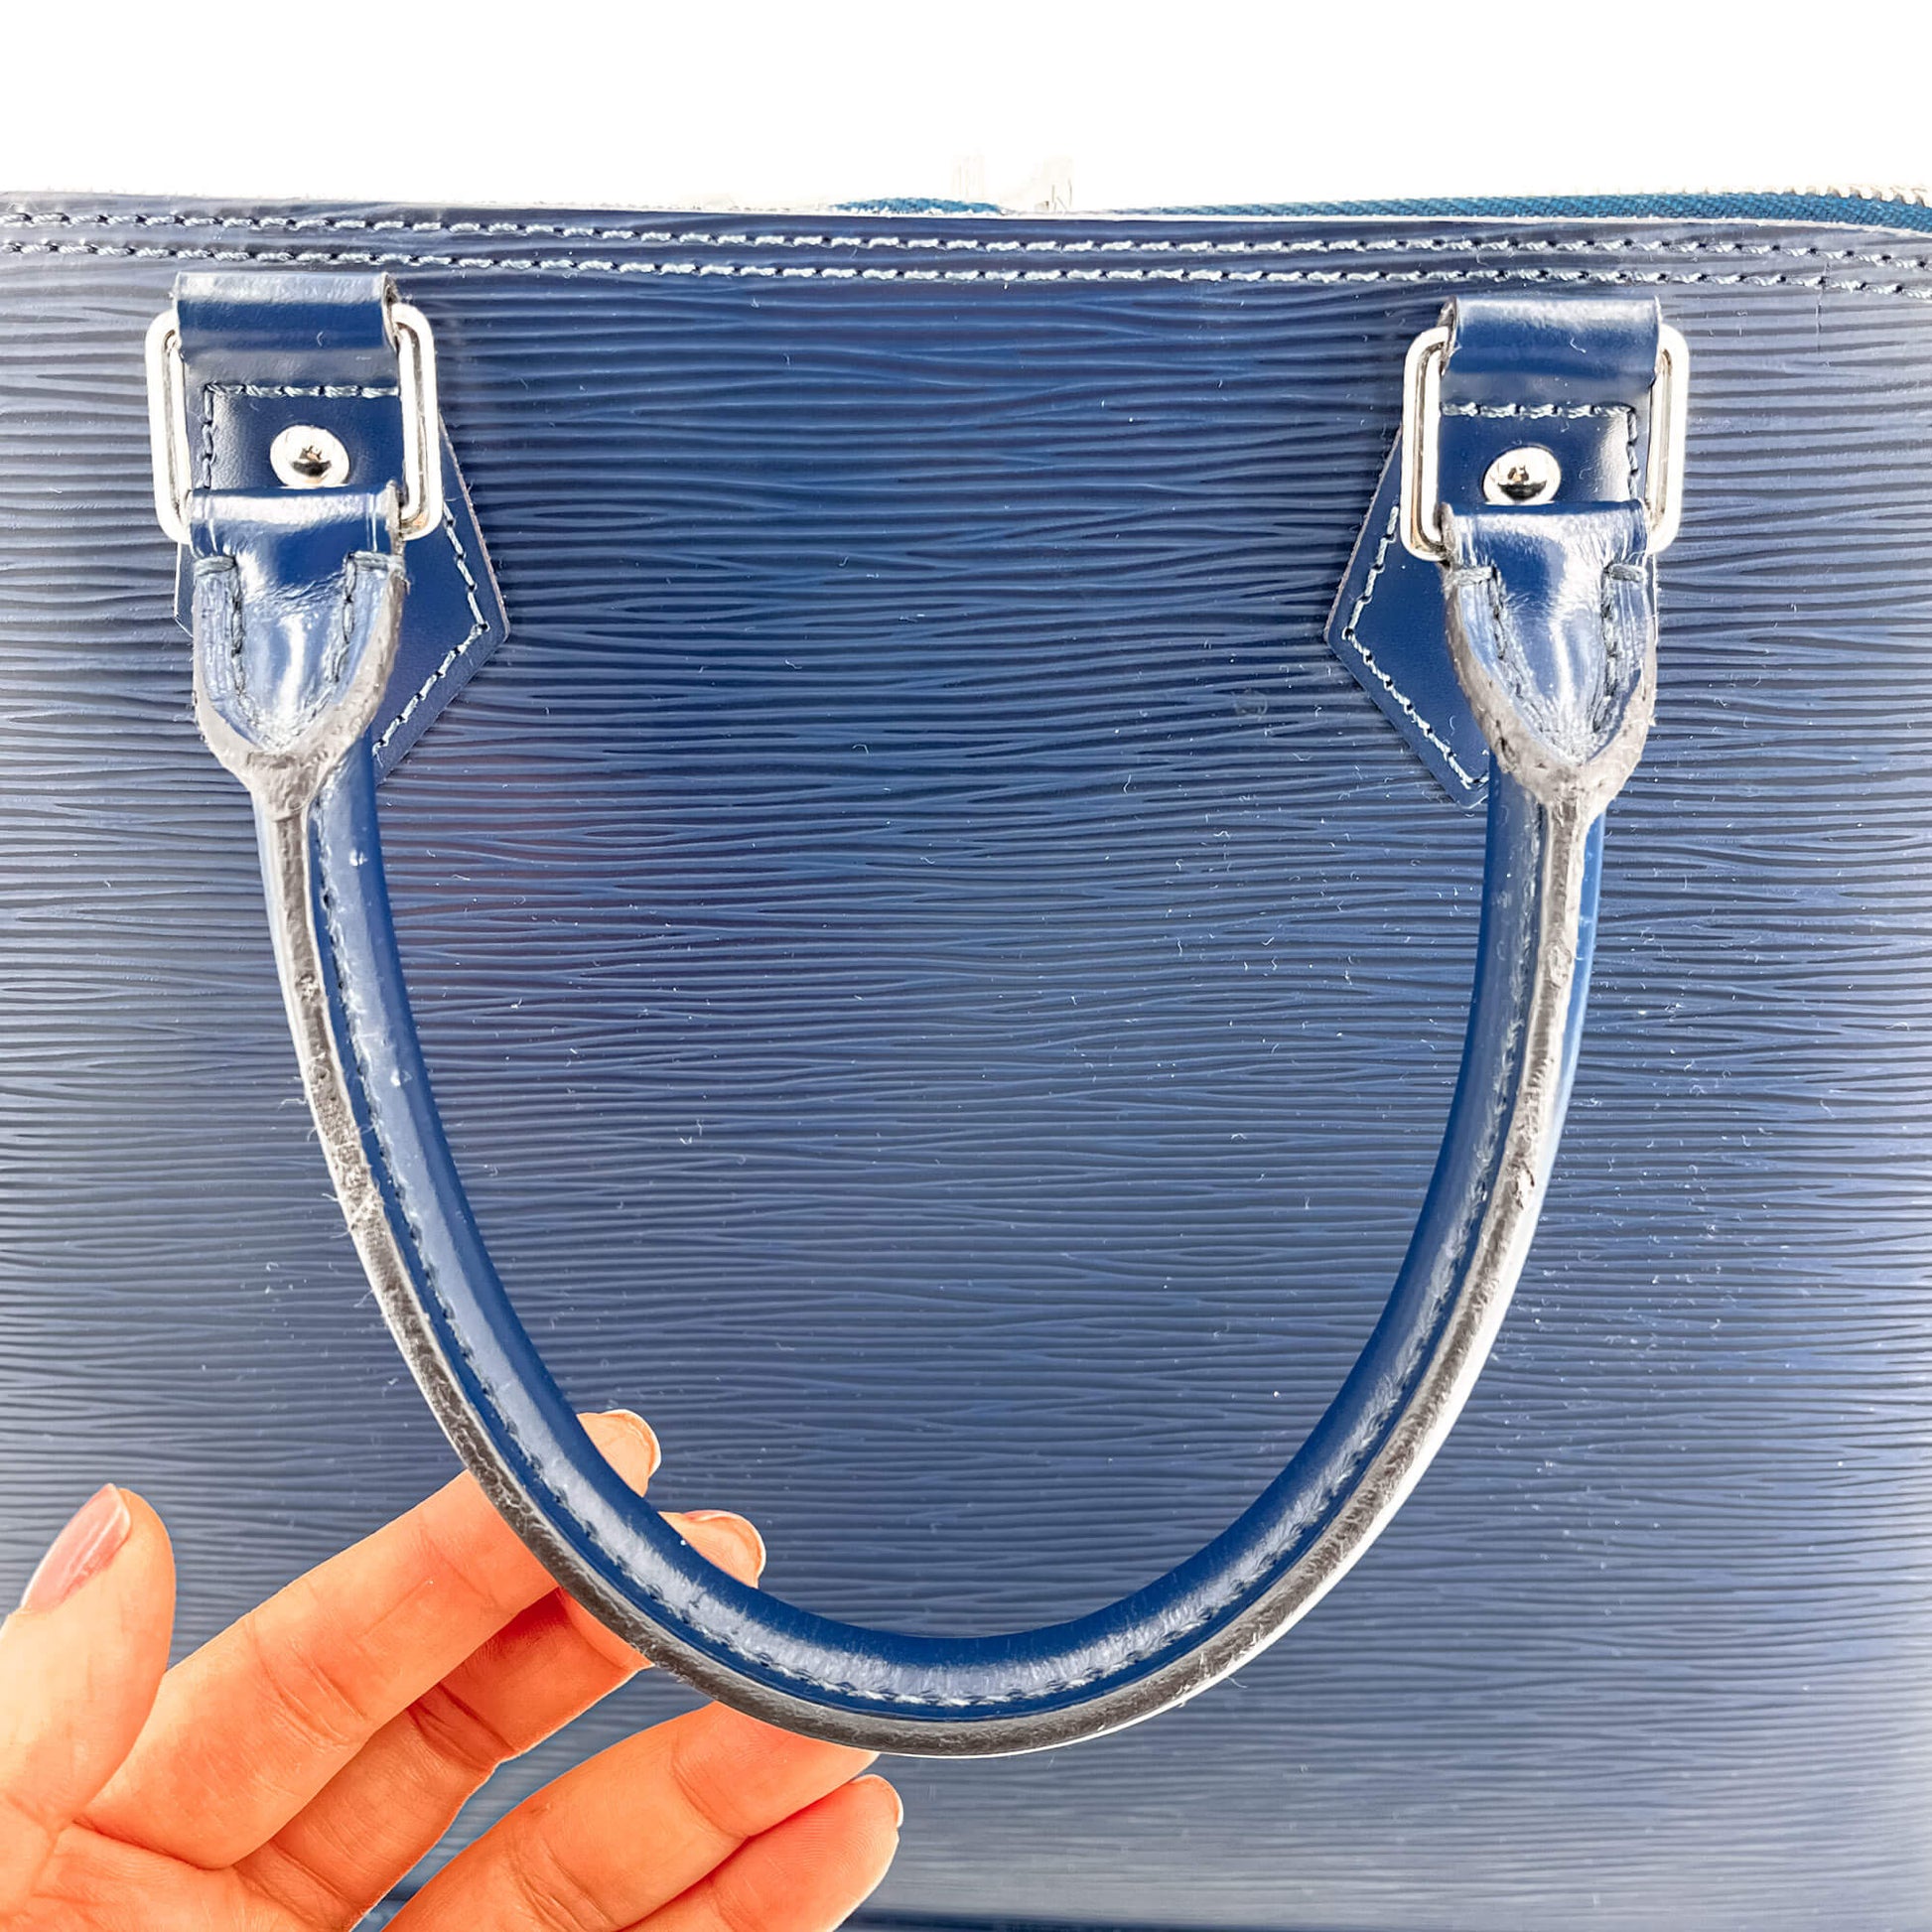 Louis Vuitton Vintage Louis Vuitton Alma Blue Epi Leather Handbag +